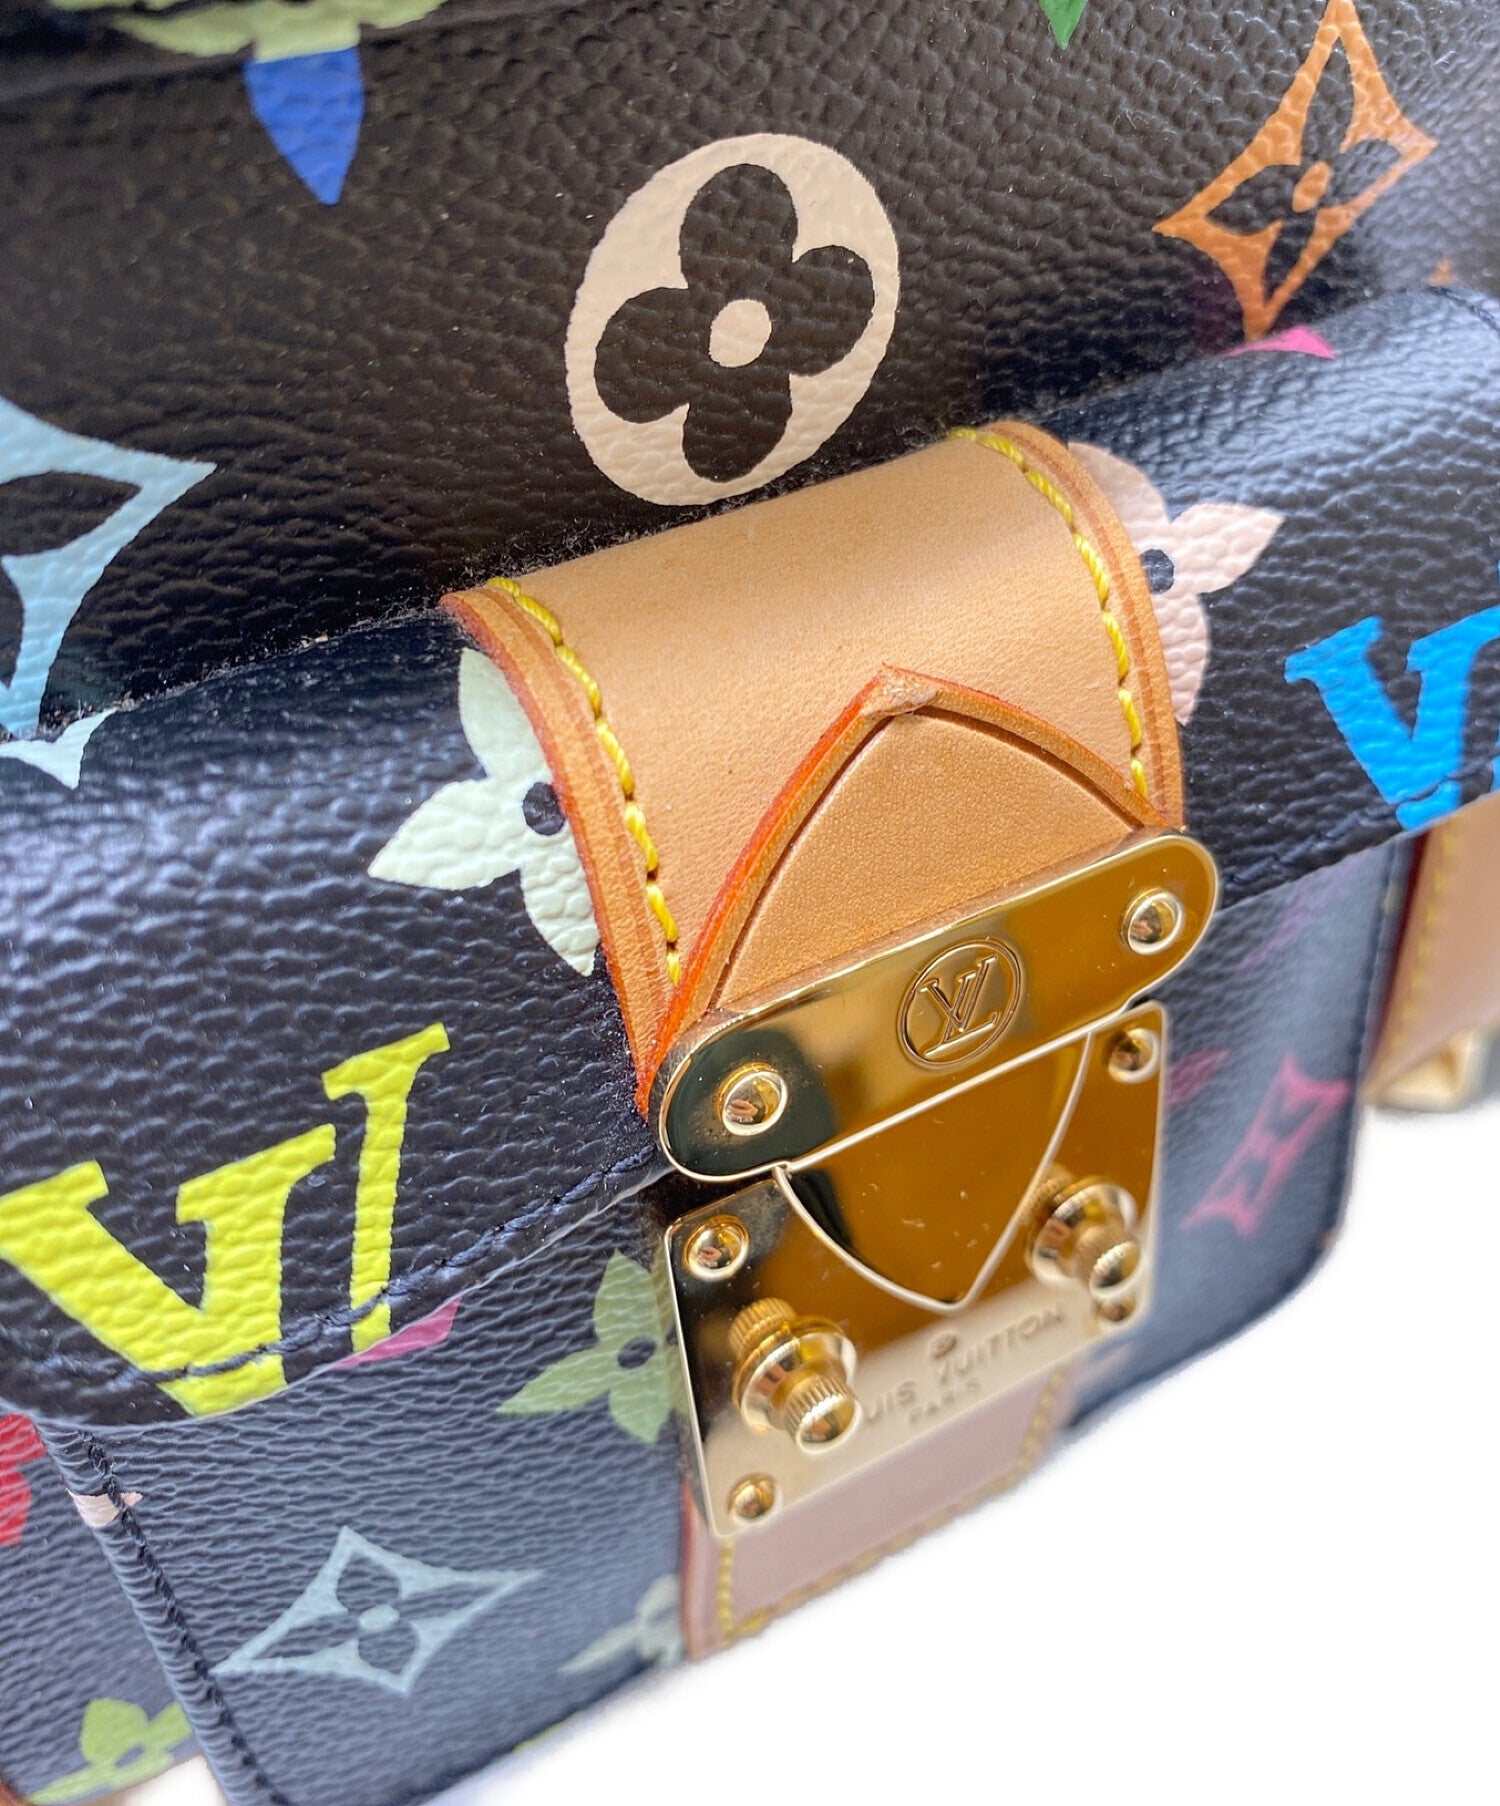 How Louis Vuitton & Takashi Murakami's Monogram Bags Became A